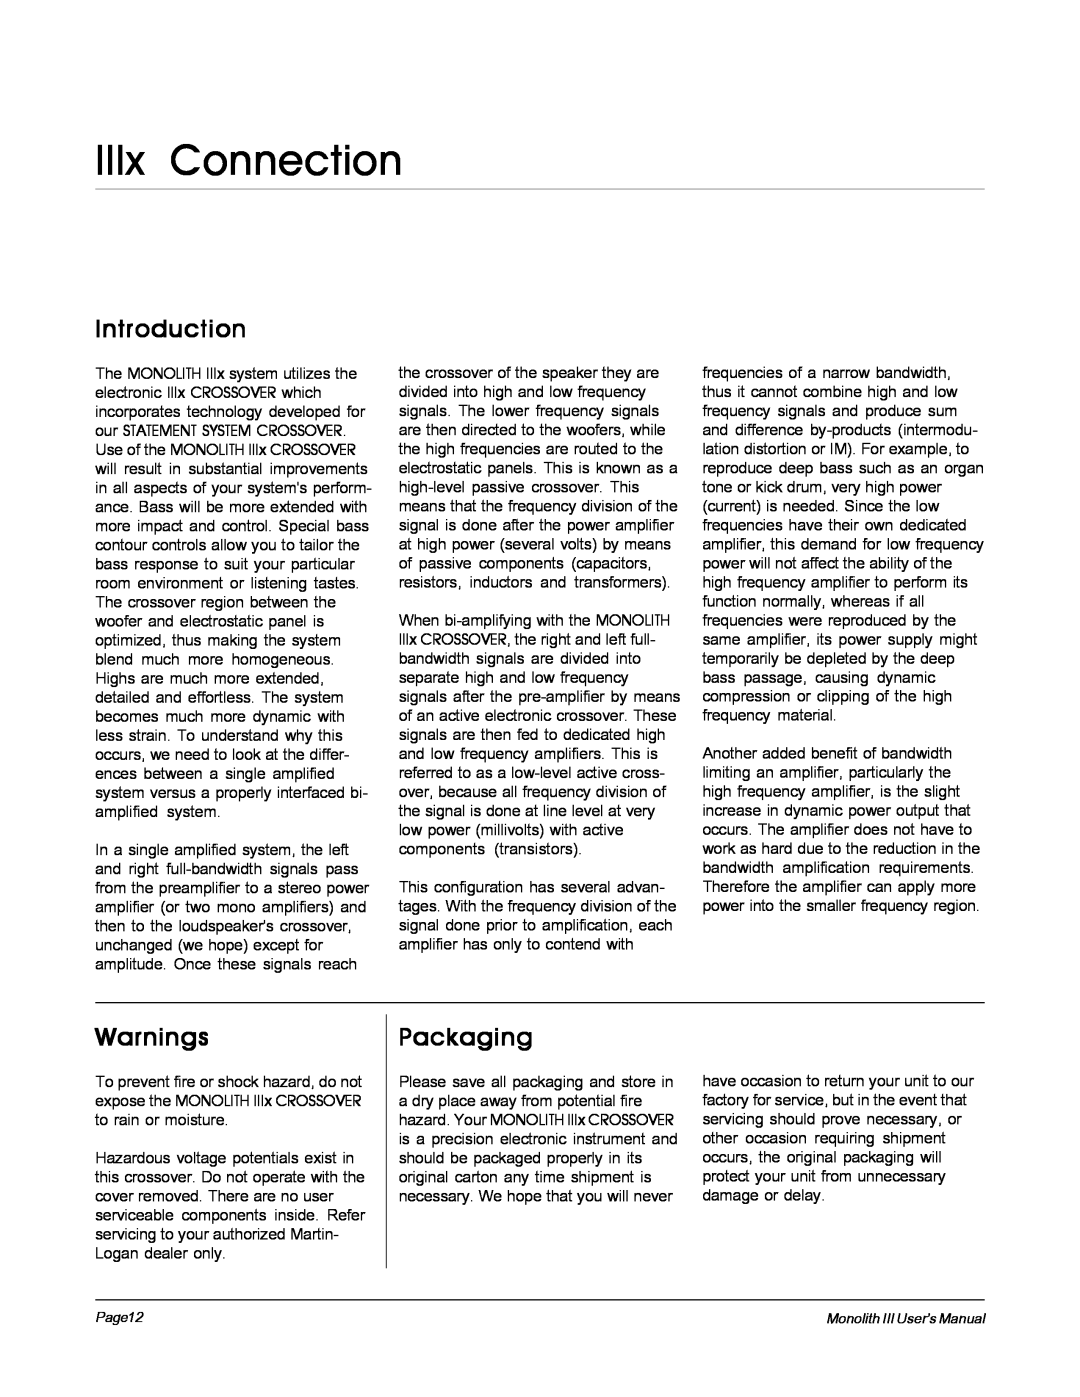 MartinLogan Monolith III user manual IIIx Connection, Introduction, Warnings, Packaging 